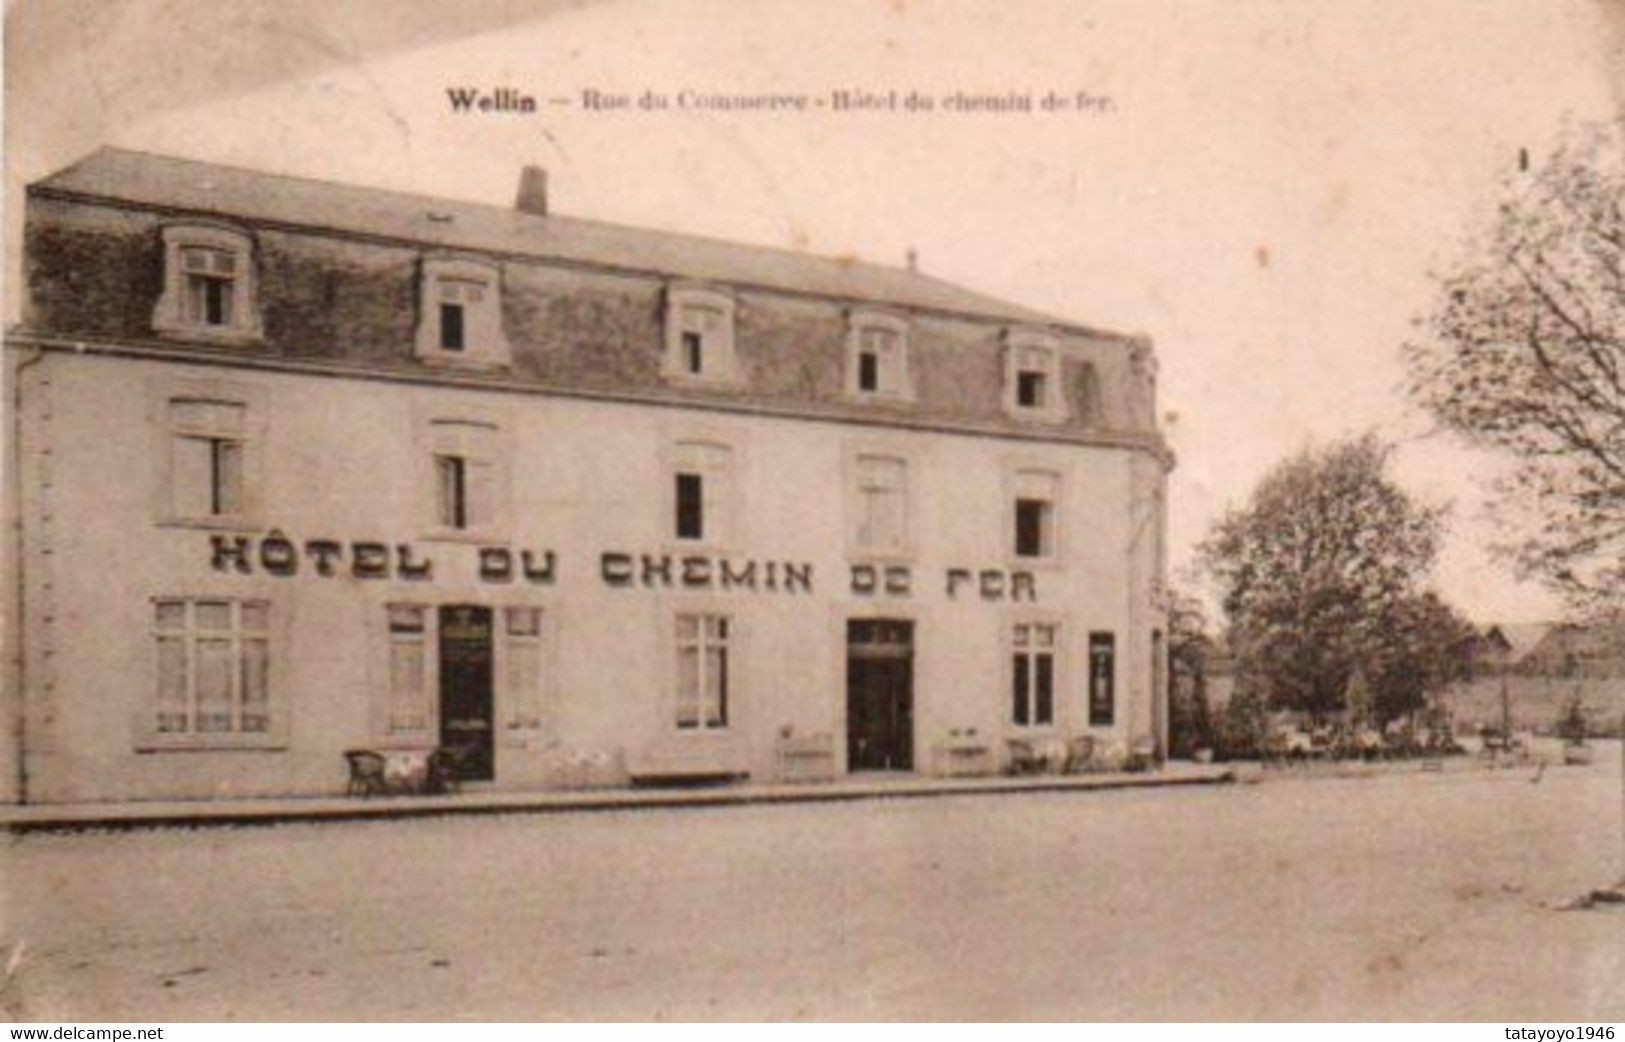 Wellin  Rare Rue Du Commerce  Hotel Du Chemin De Fer Circulé En 1927 - Wellin